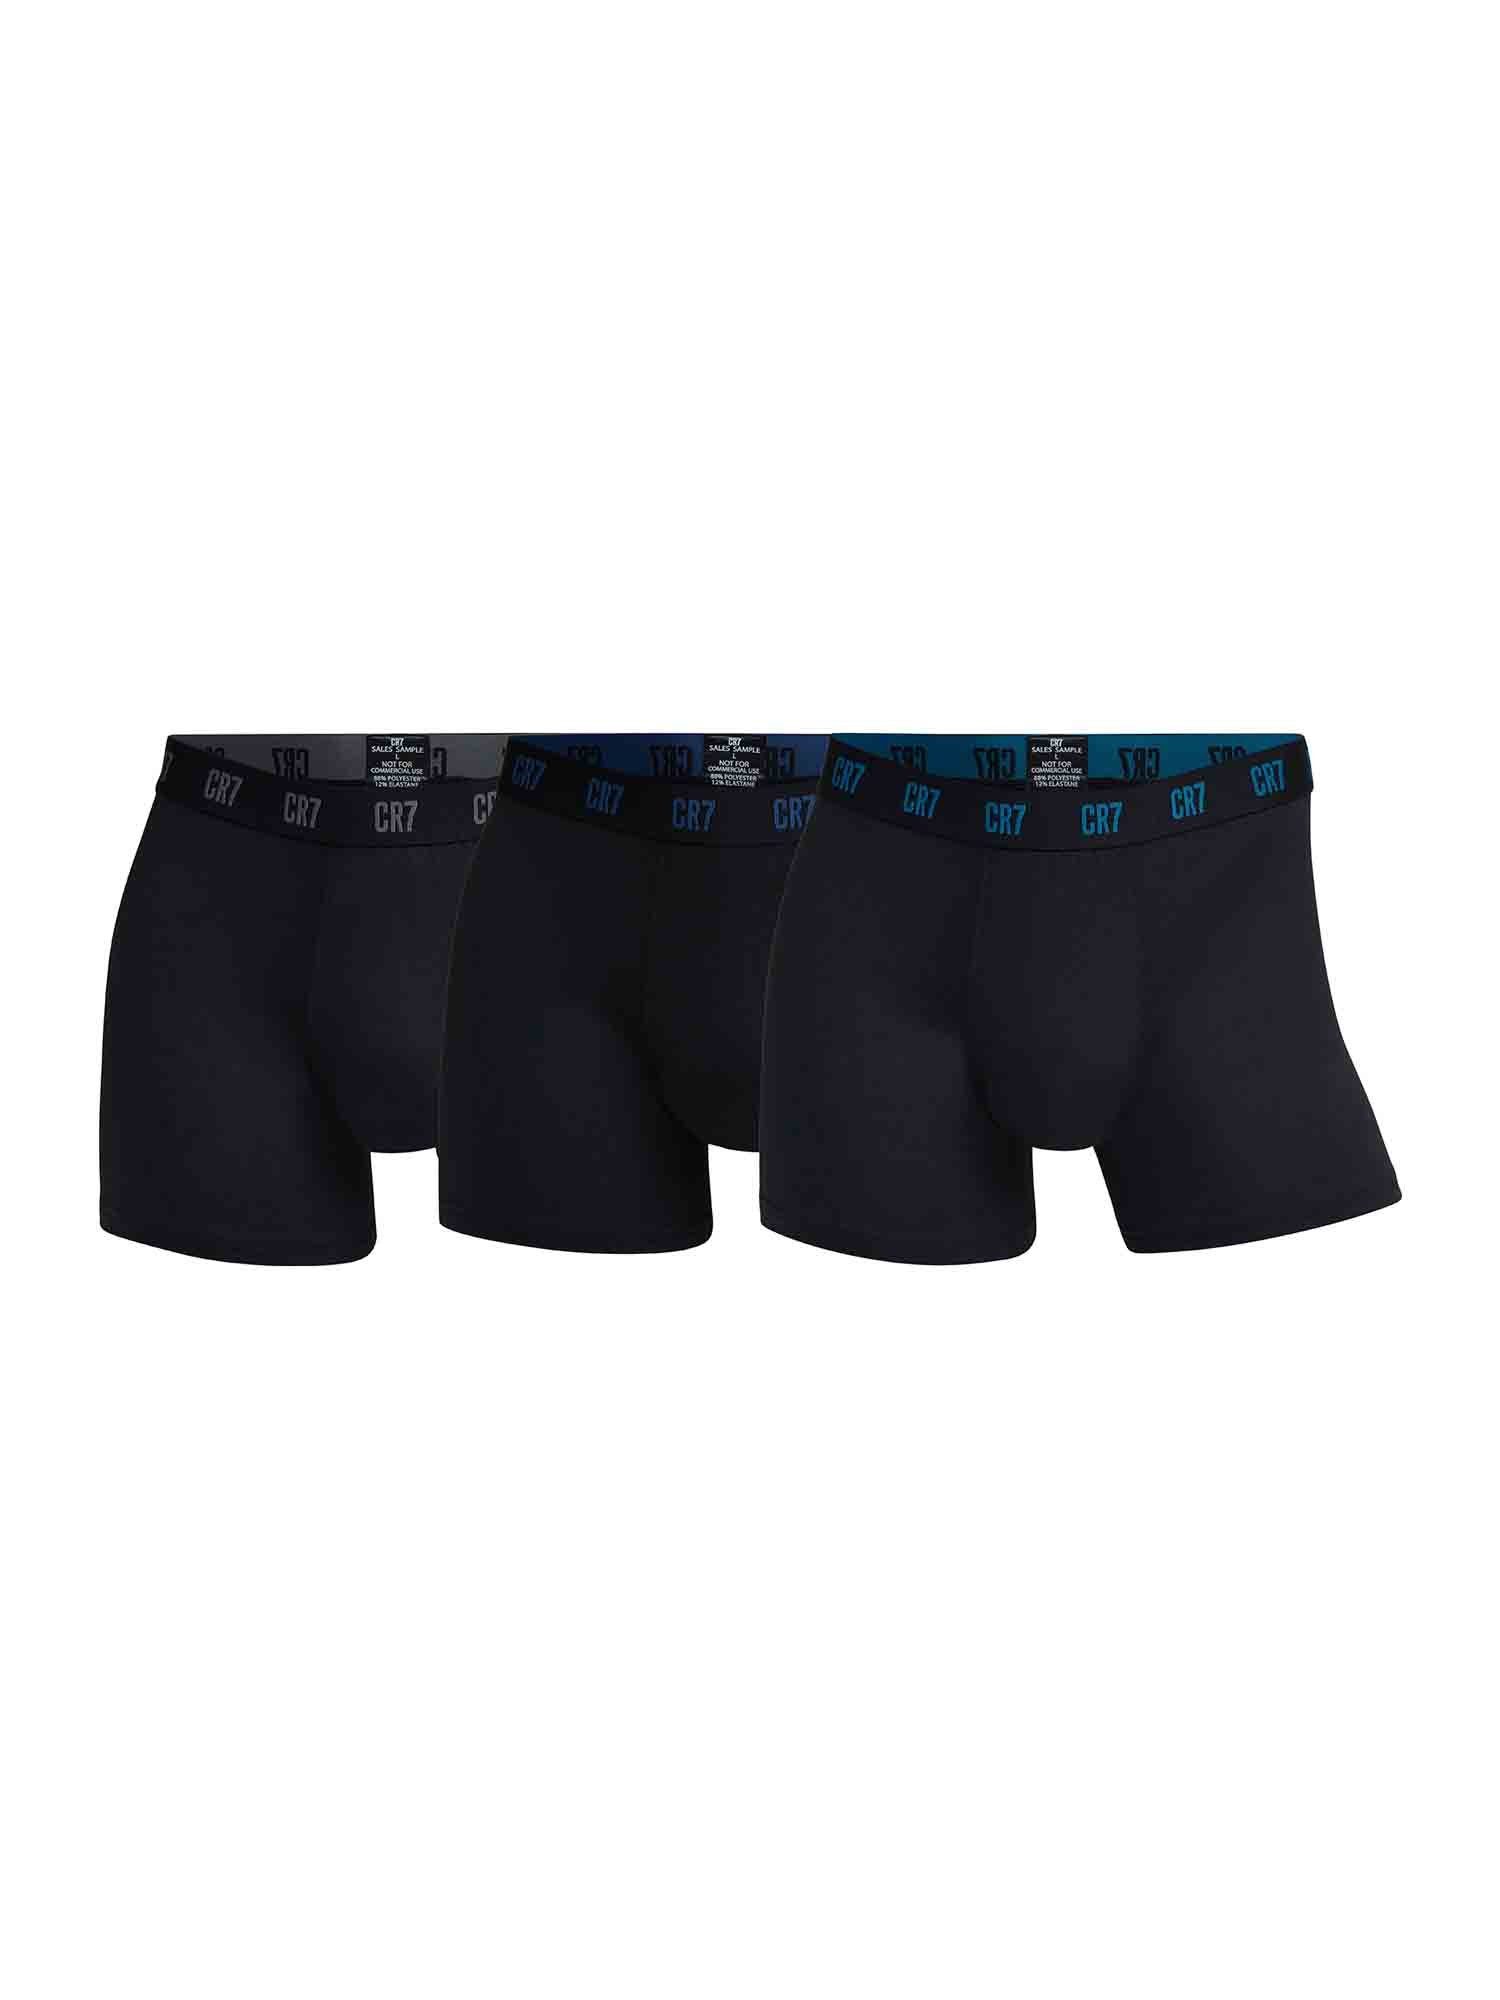 Pants Multi 18 Boxershorts Retro Retro Trunks Herren CR7 Männer (3-St) Multipack Pants